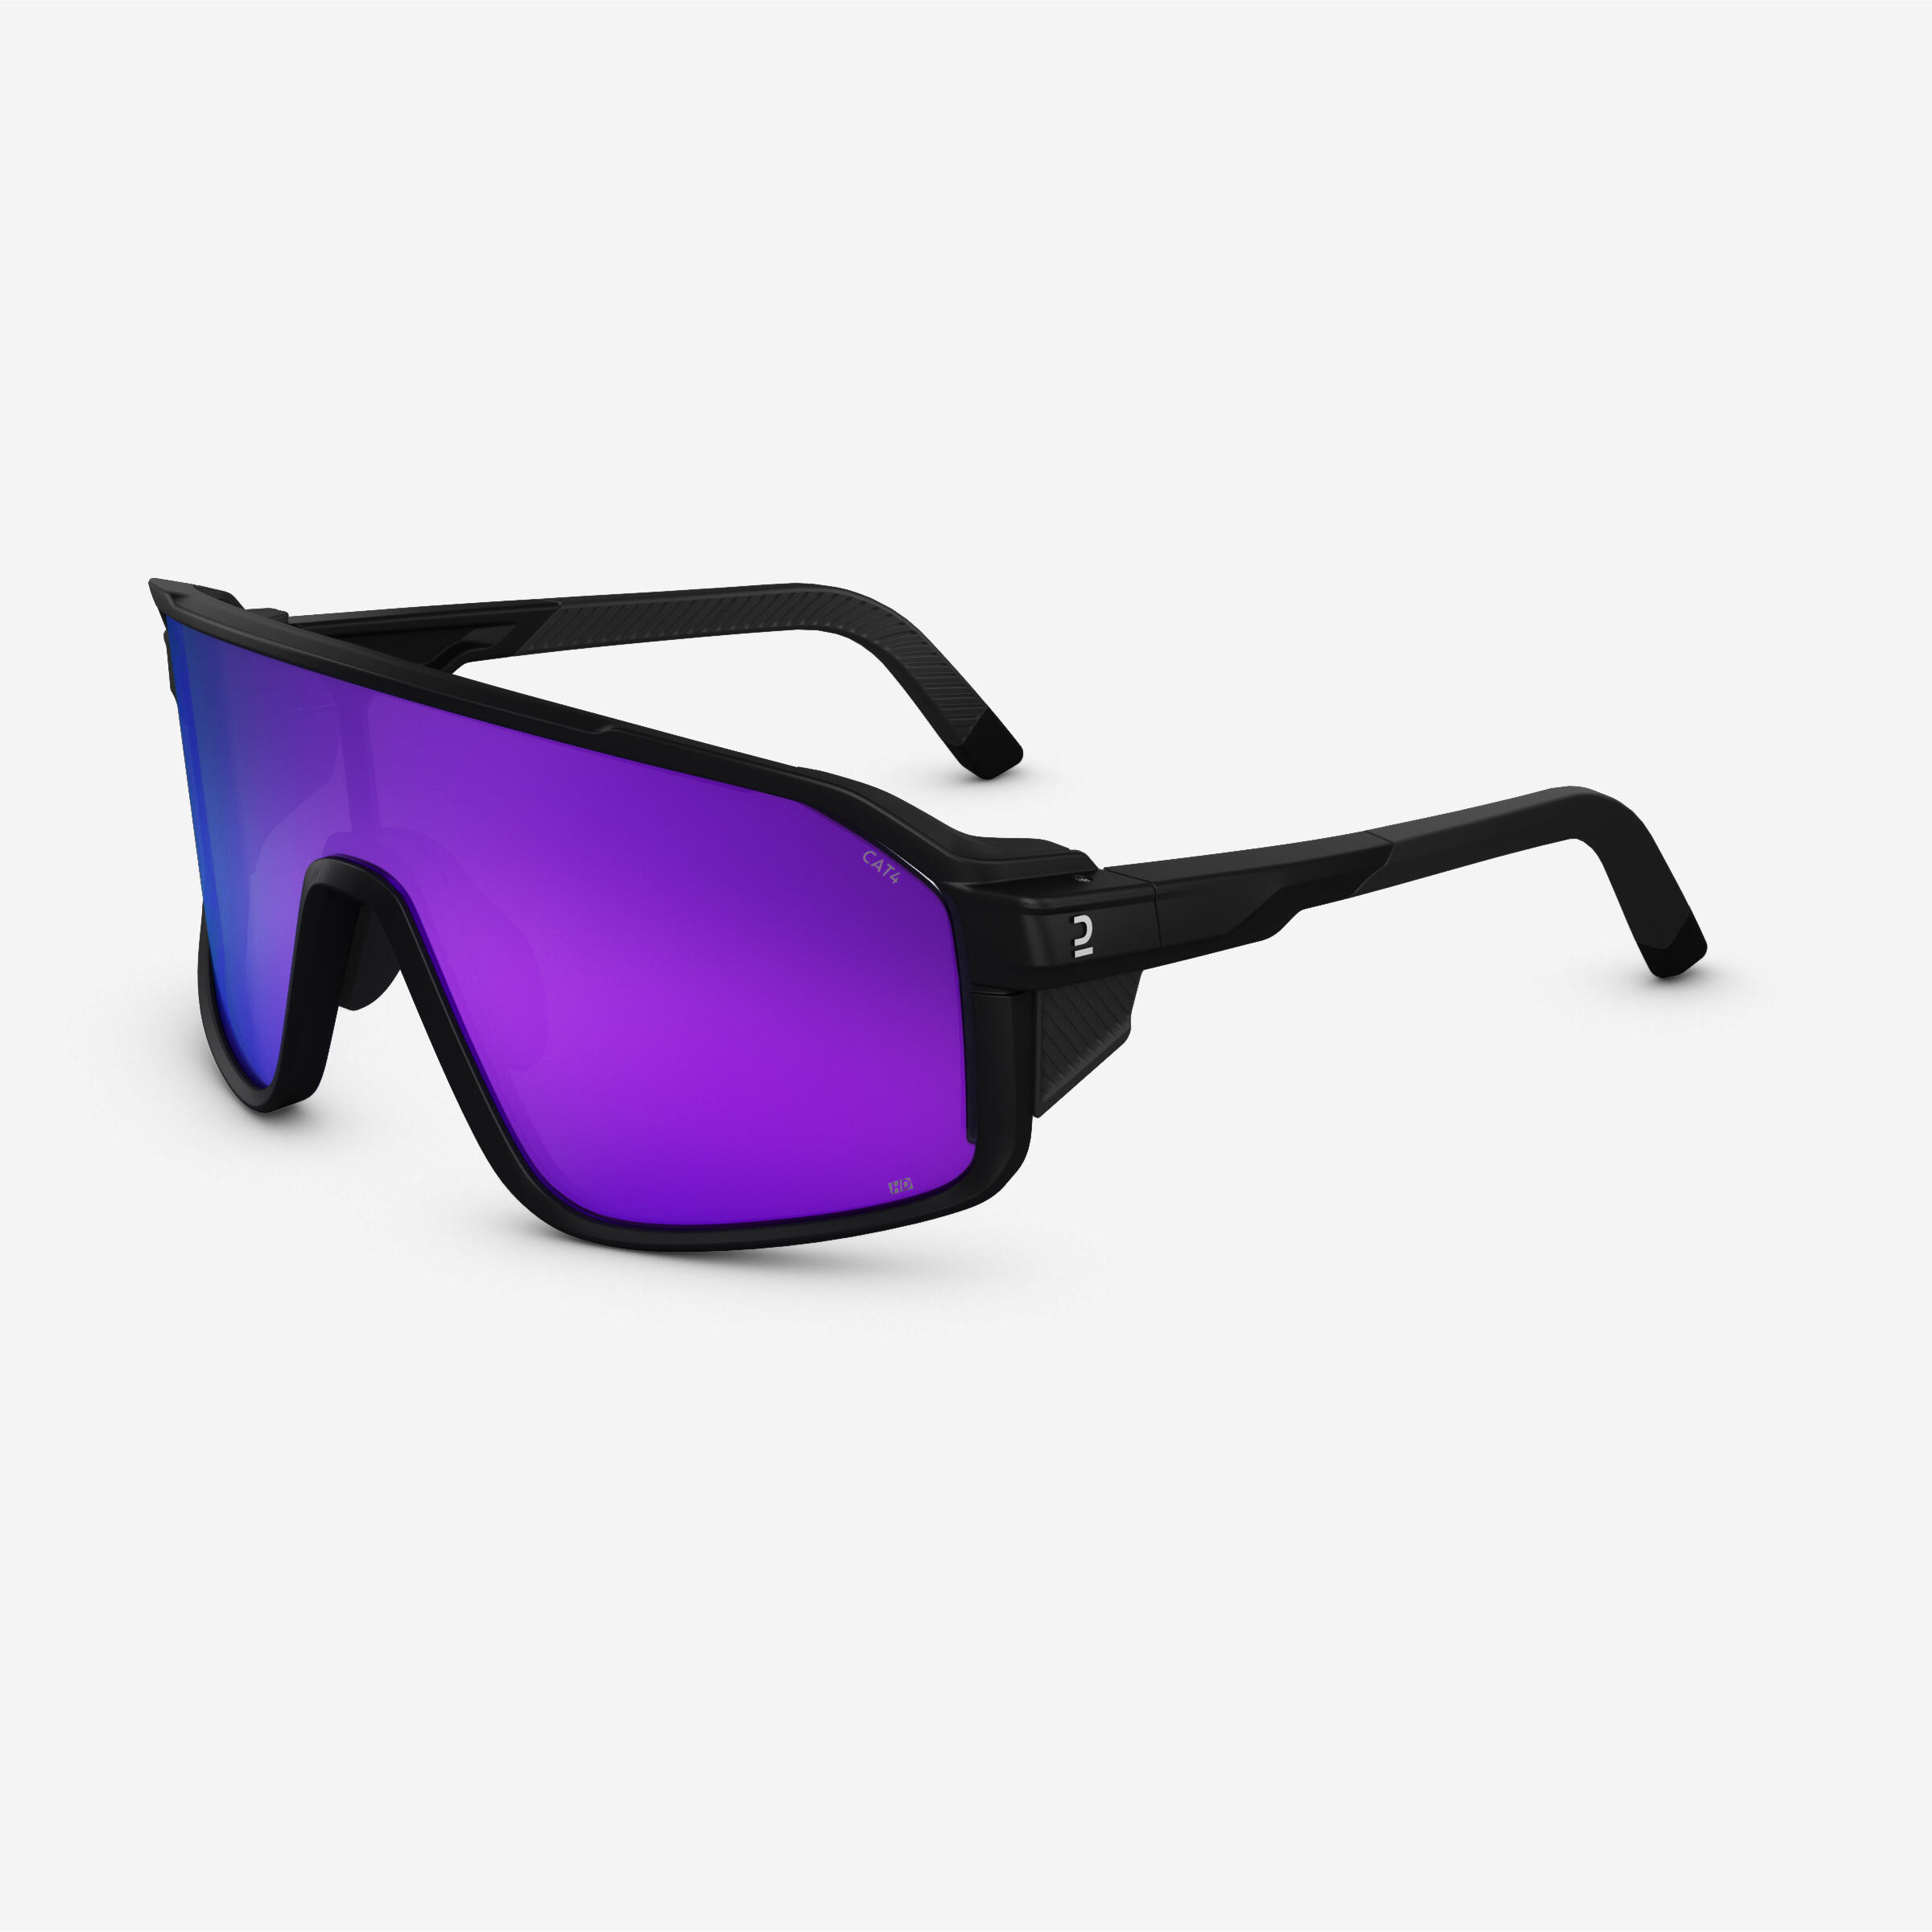 Category 4 Sunglasses - MH 900